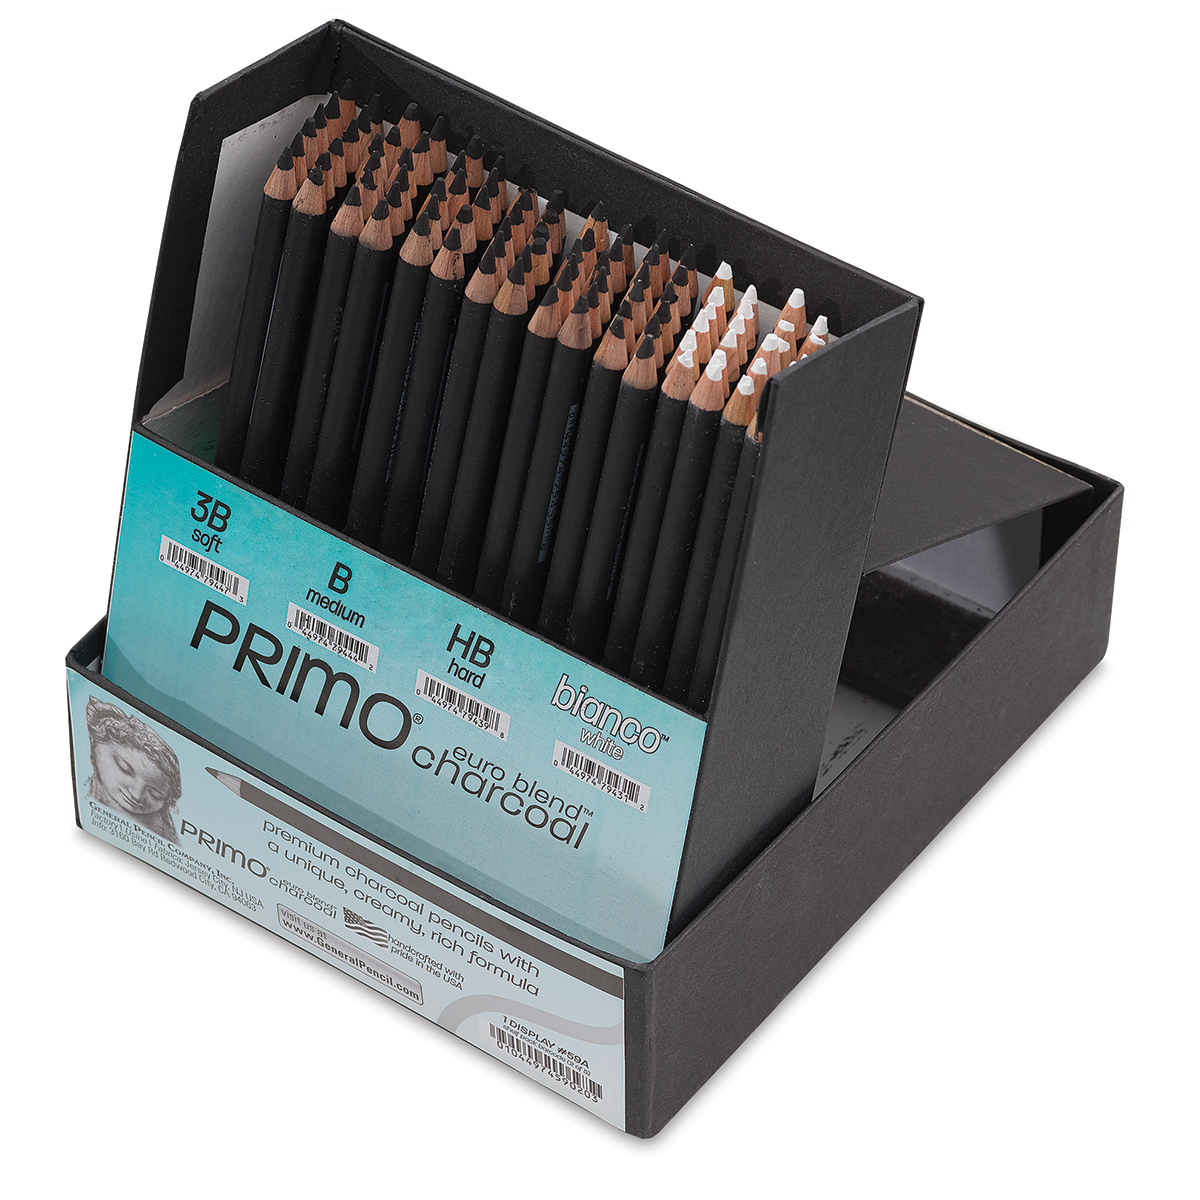 Primo Euro Blend Charcoal Pencils - 4 Piece Set, Hobby Lobby